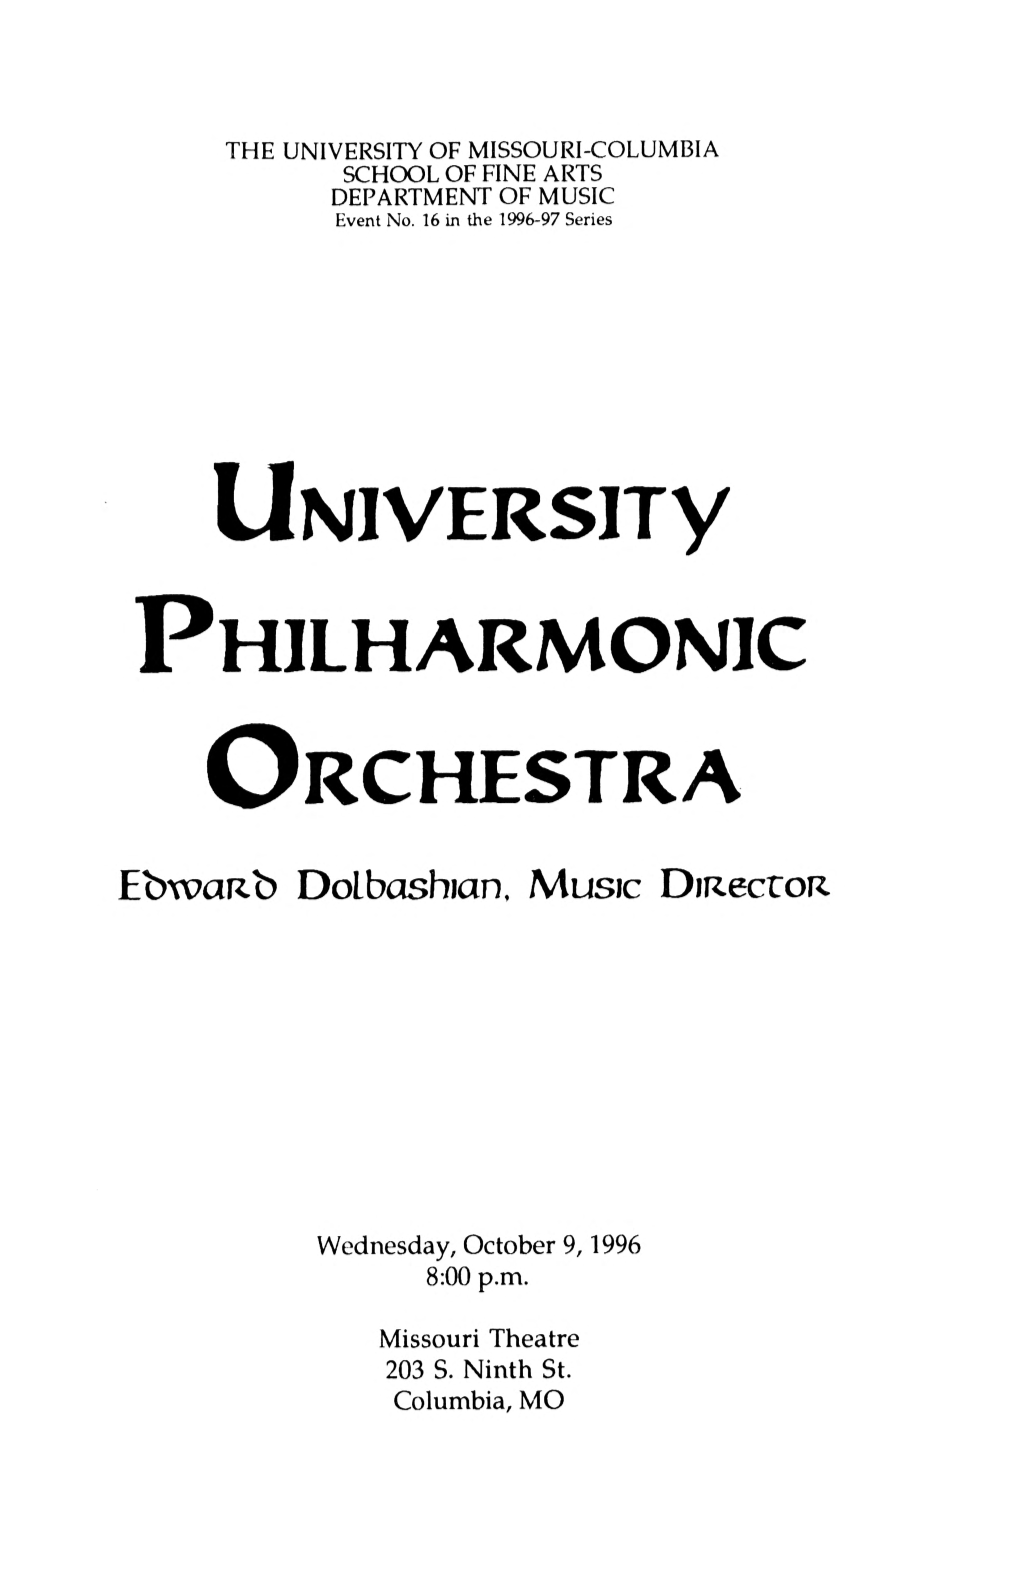 University Philharmonic Orchestra